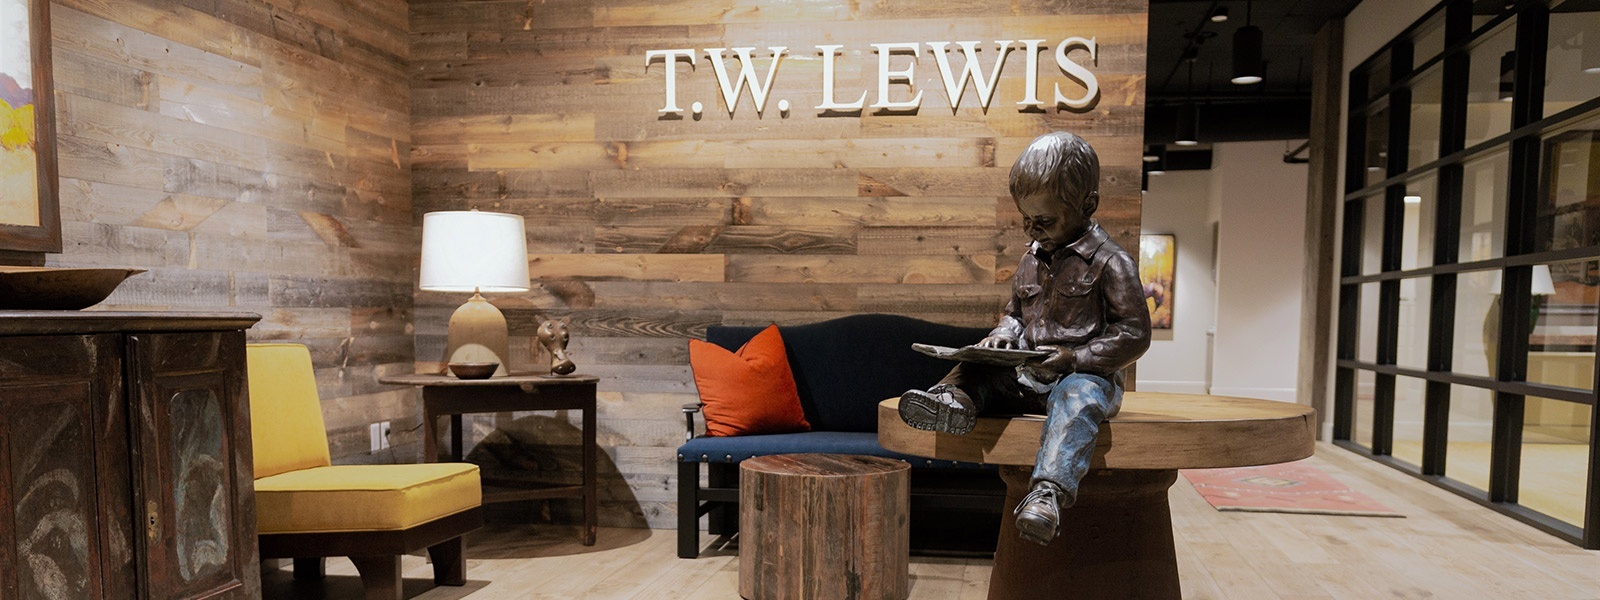 T.W. Lewis Foundation